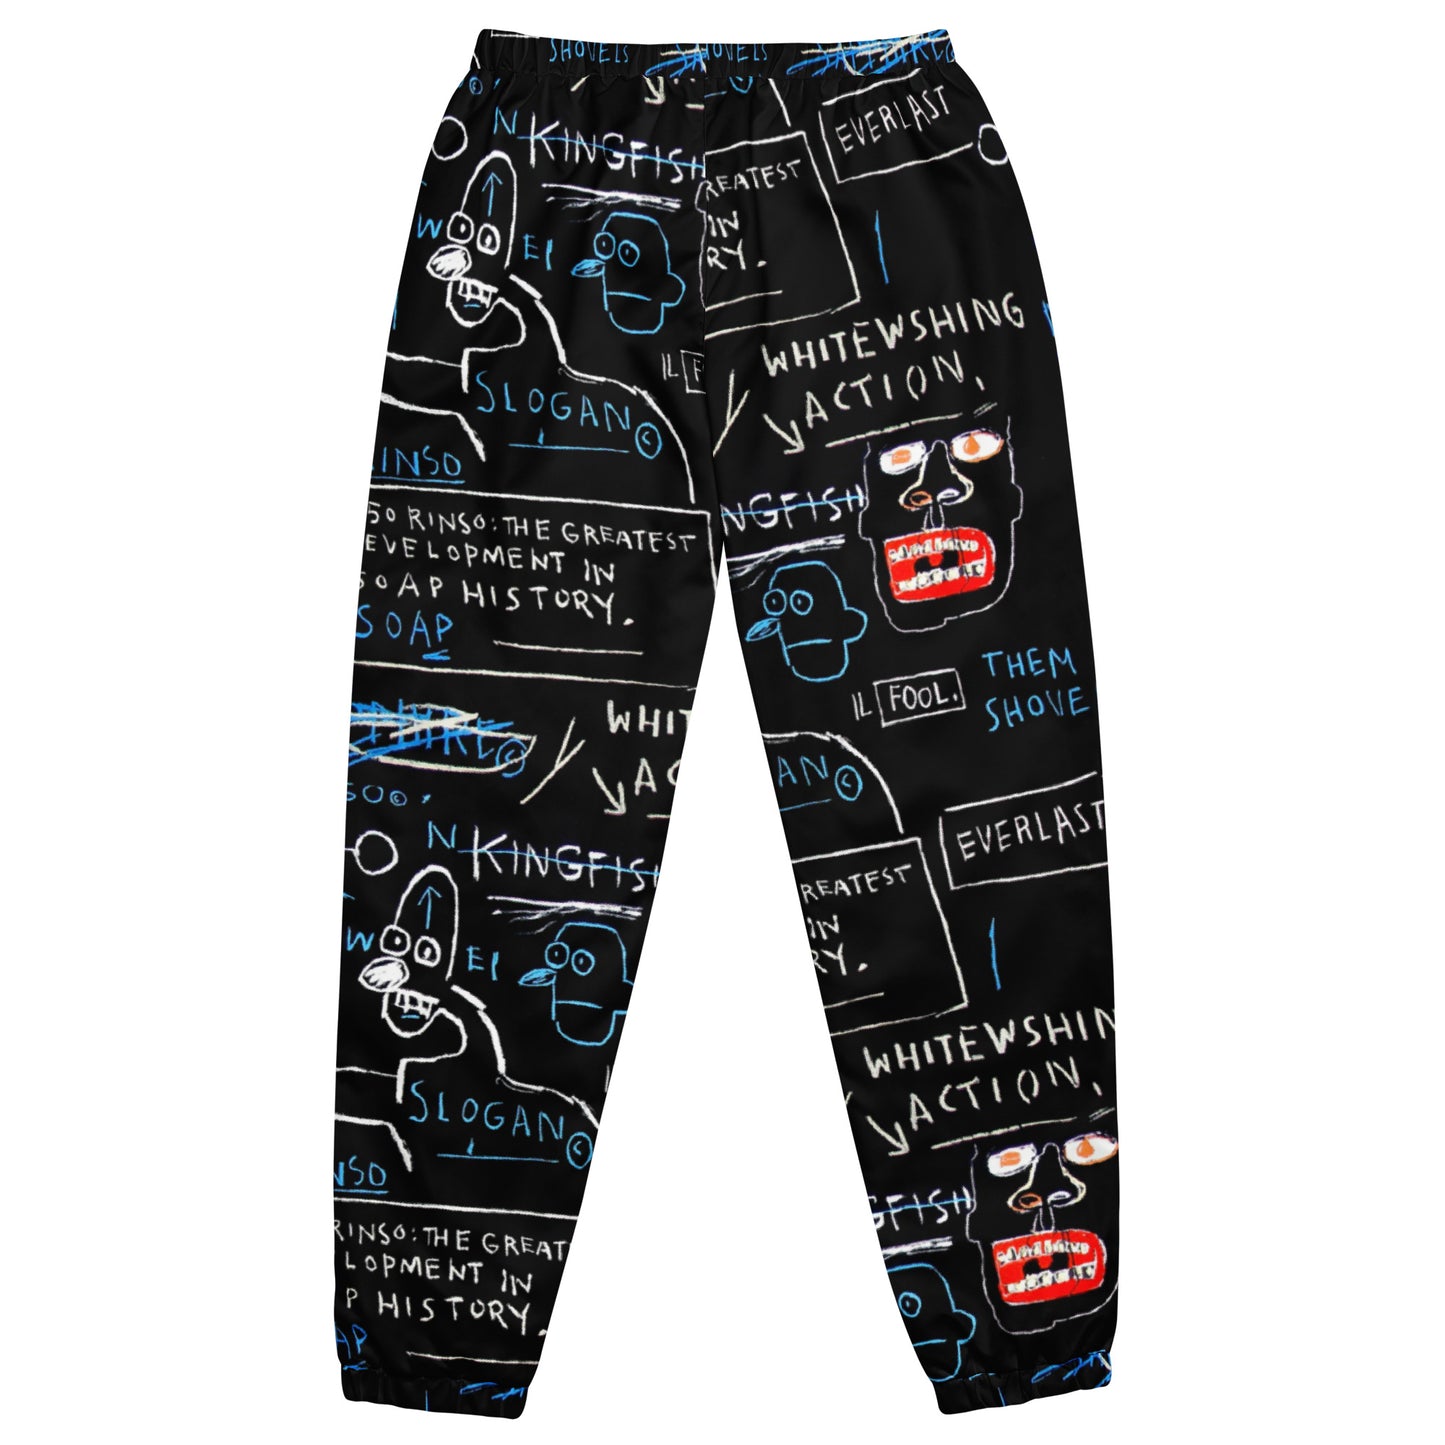 Jean-Michel Basquiat "Rinso" Artwork Printed Premium Streetwear Track Pants